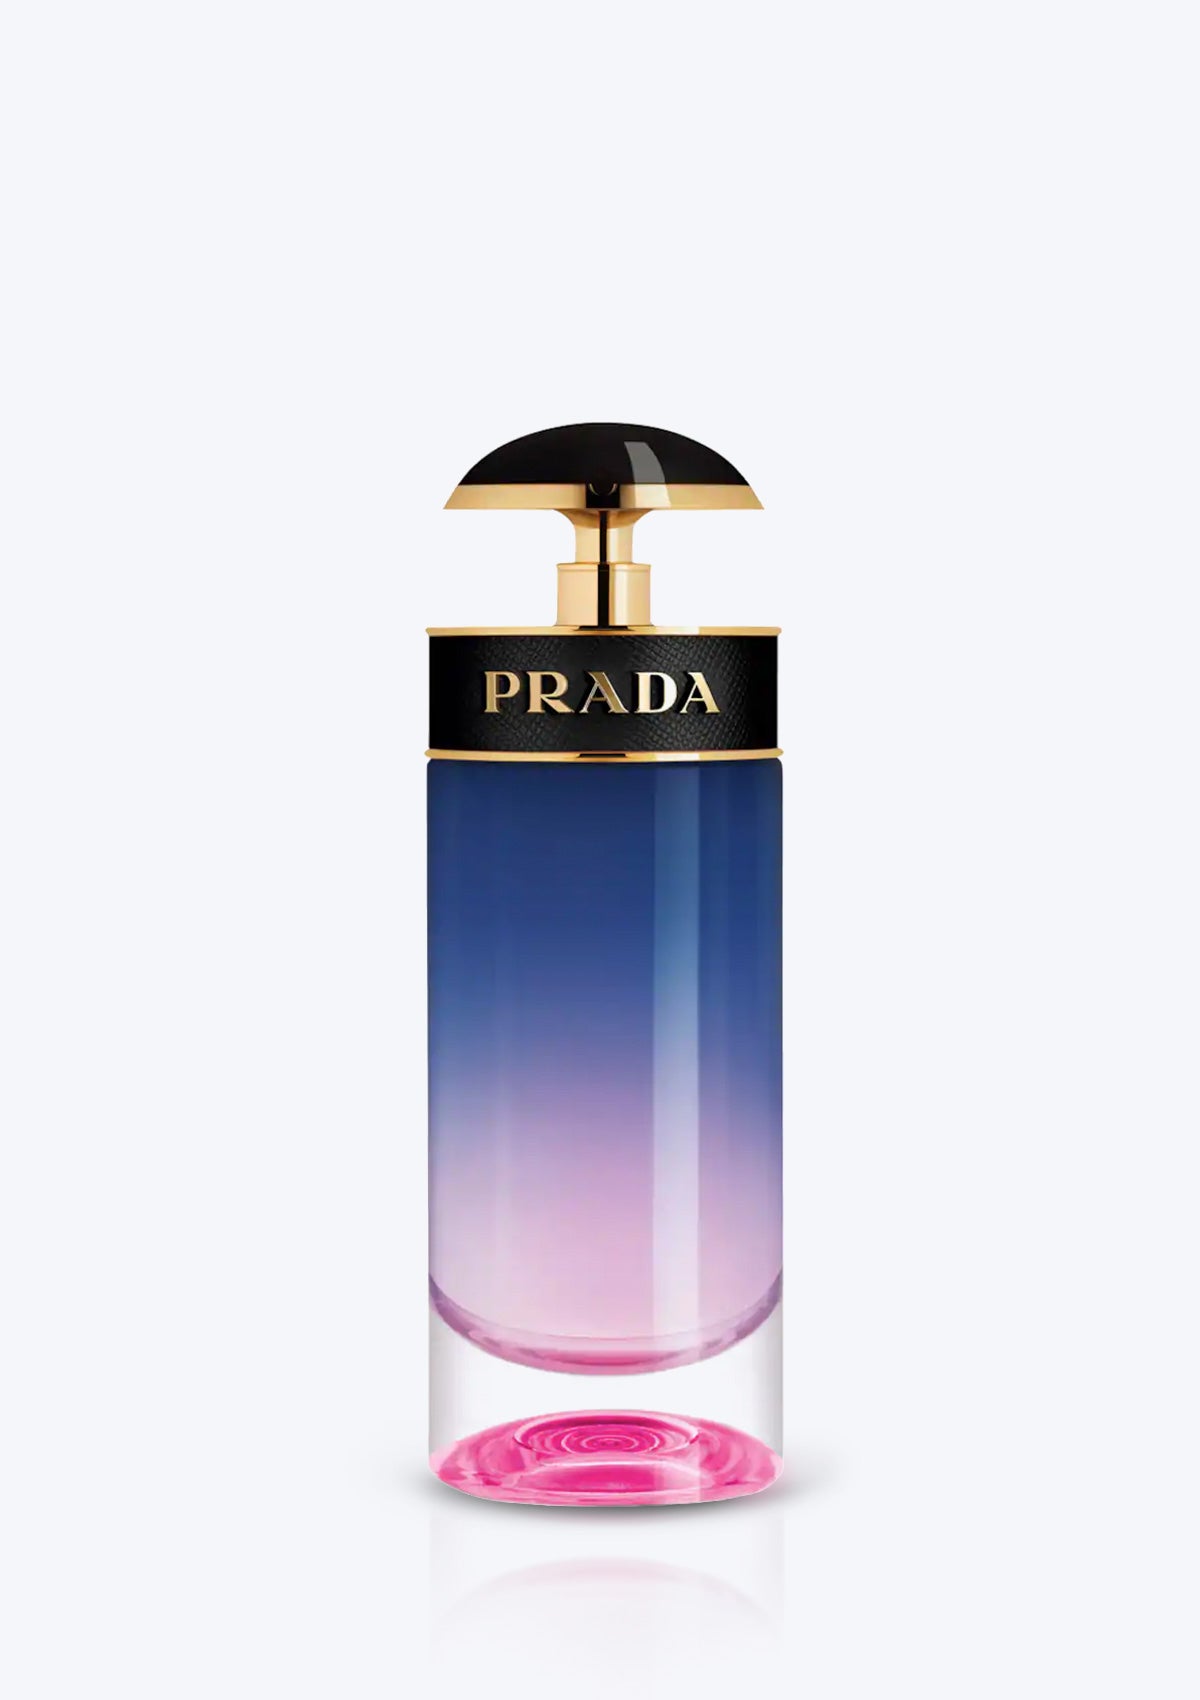 Prada – Paris France Beauty